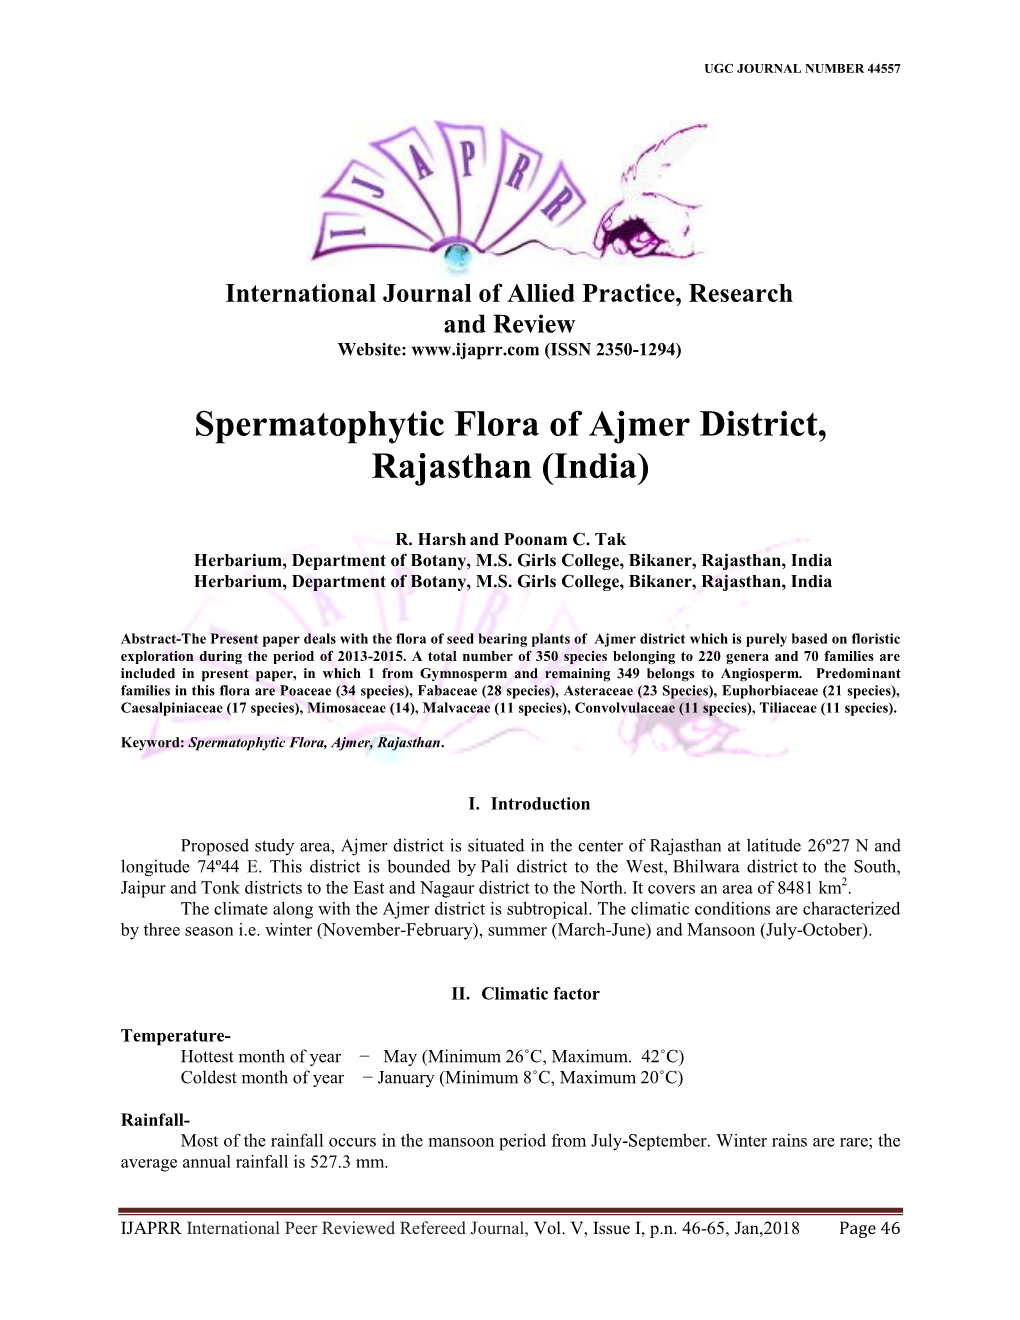 Spermatophytic Flora of Ajmer District, Rajasthan (India)